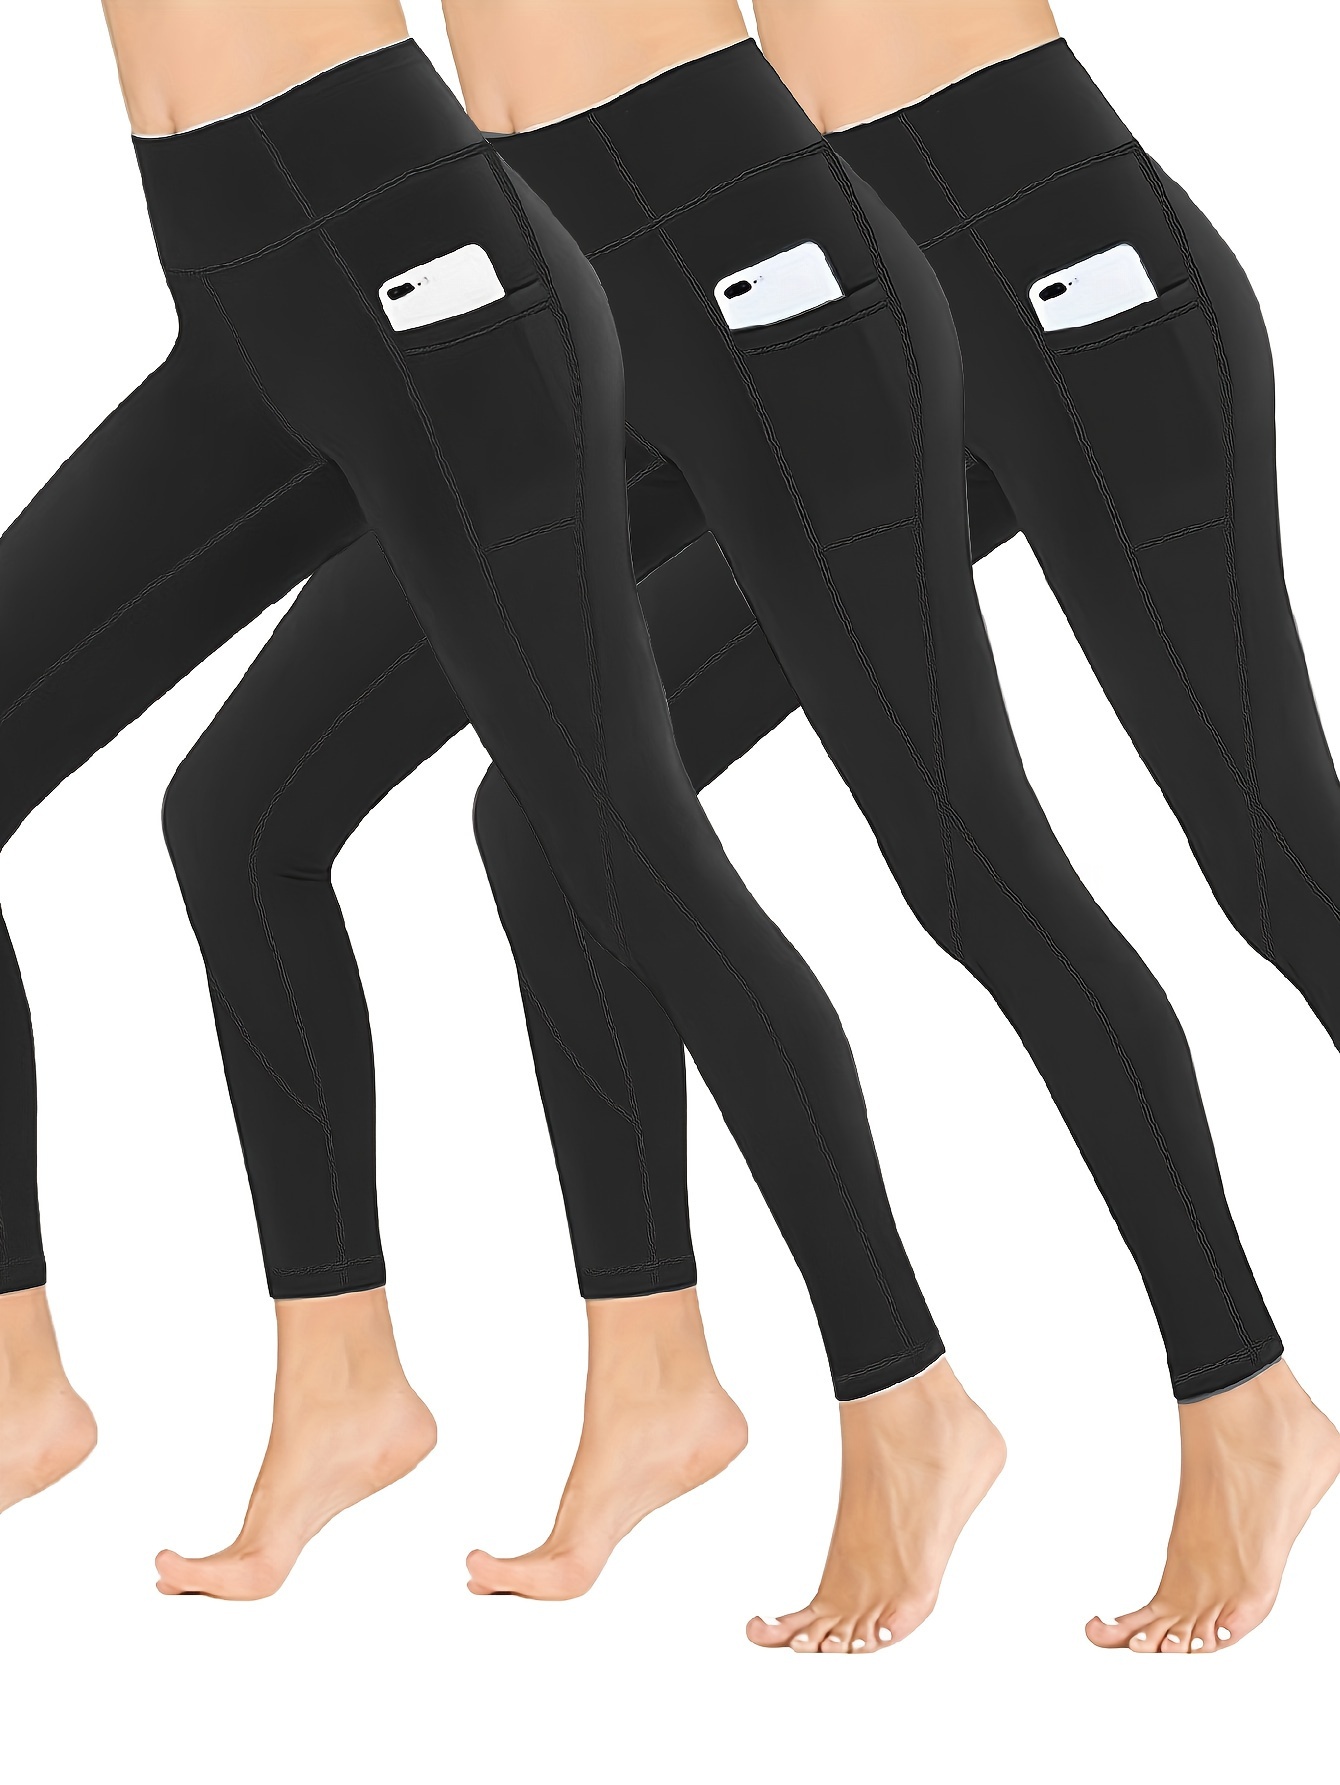 Leggins Deportivas Ropa Deportiva De Moda Licras Pantalones Para Yoga Mujer  NEW